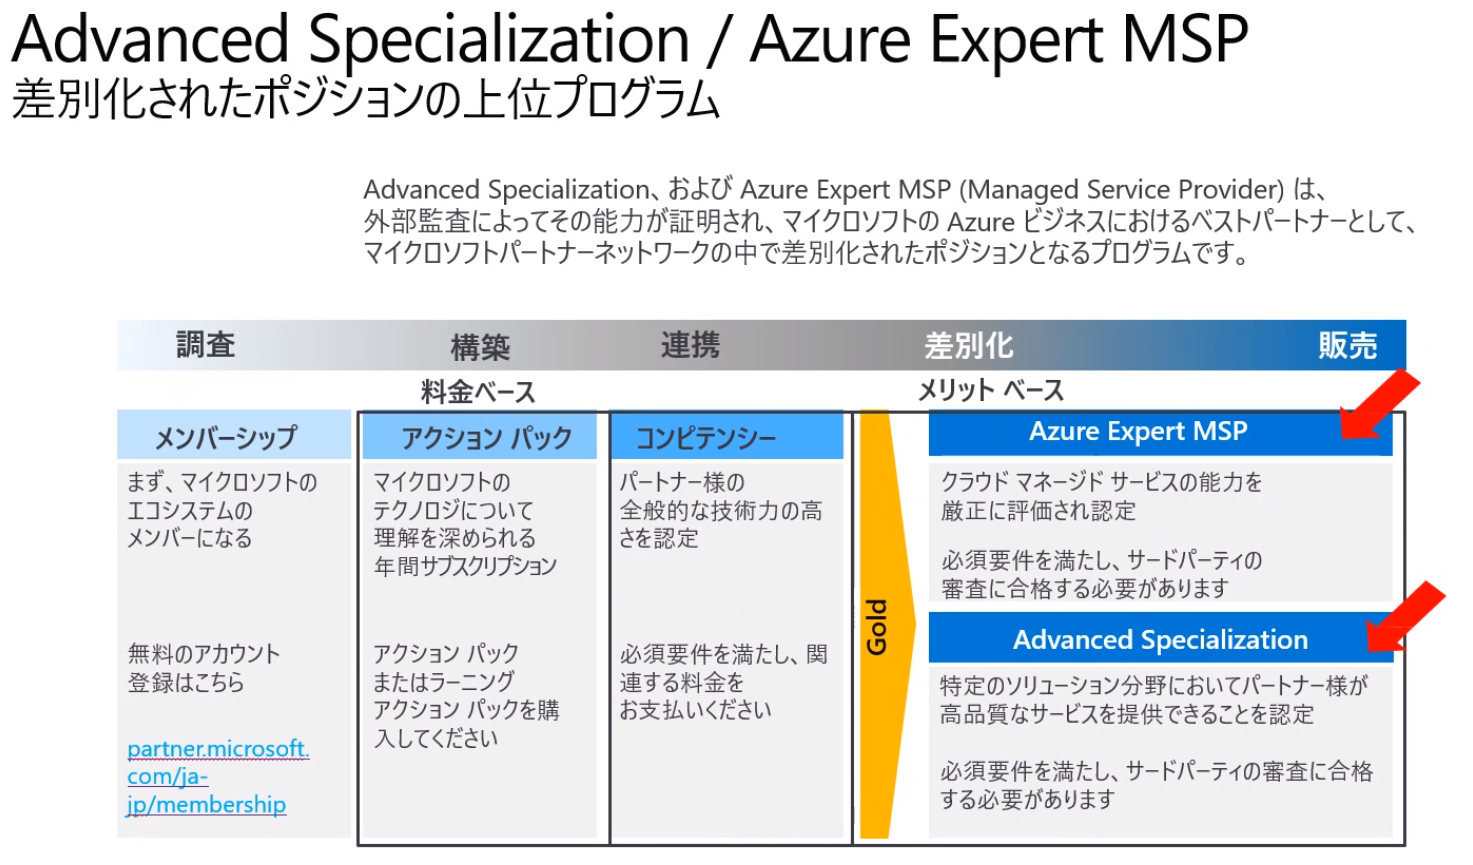 Azure Expert Managed Service Provider^Advanced SpecializationioTF{}CN\tgj